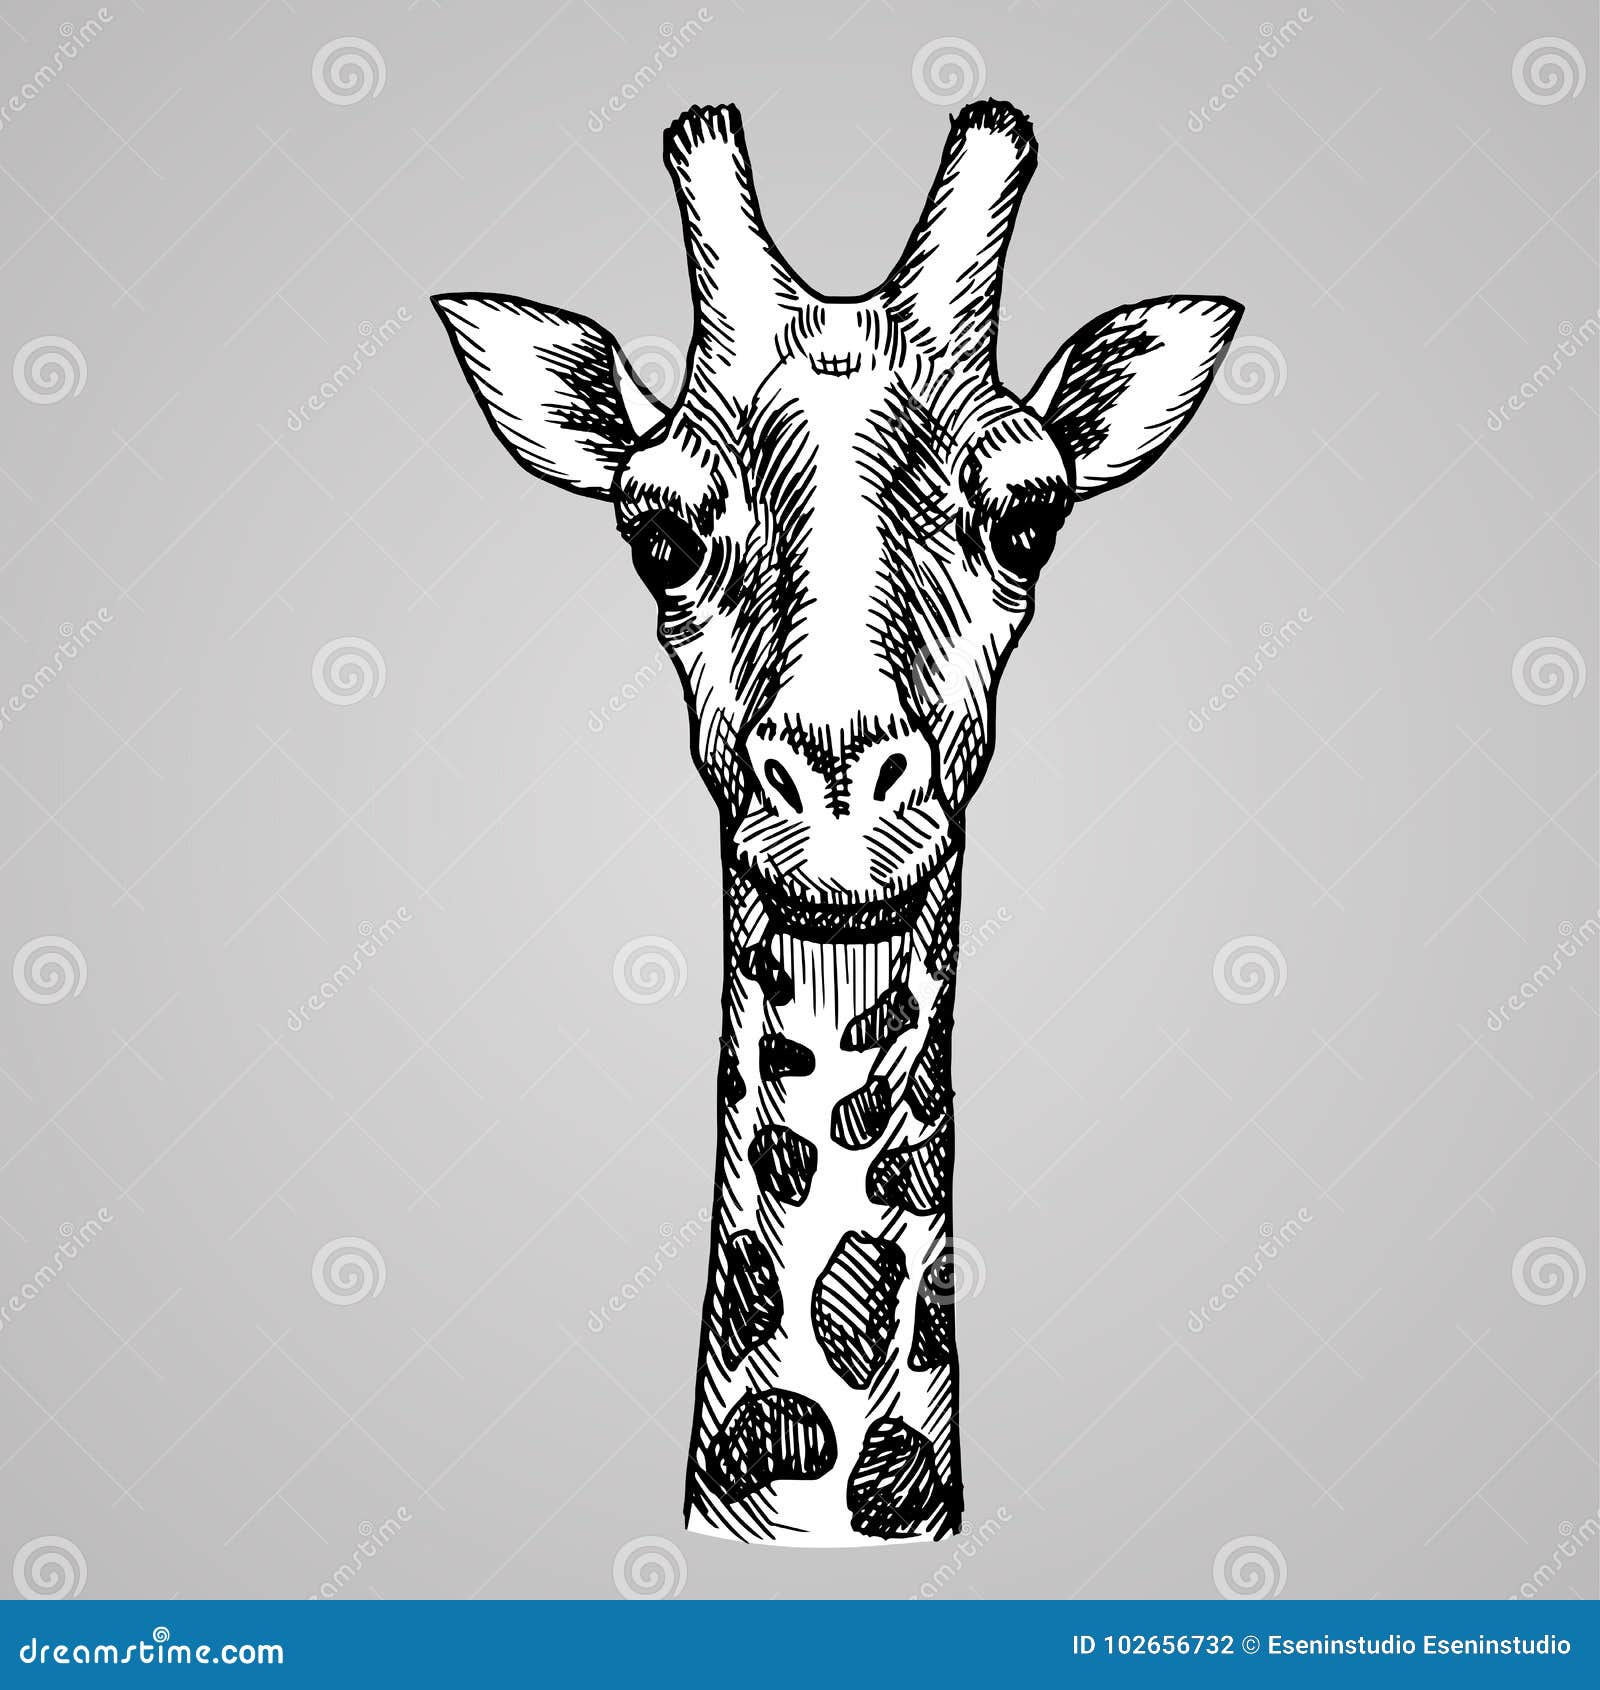 9376 Giraffe Head Drawing Images Stock Photos  Vectors  Shutterstock